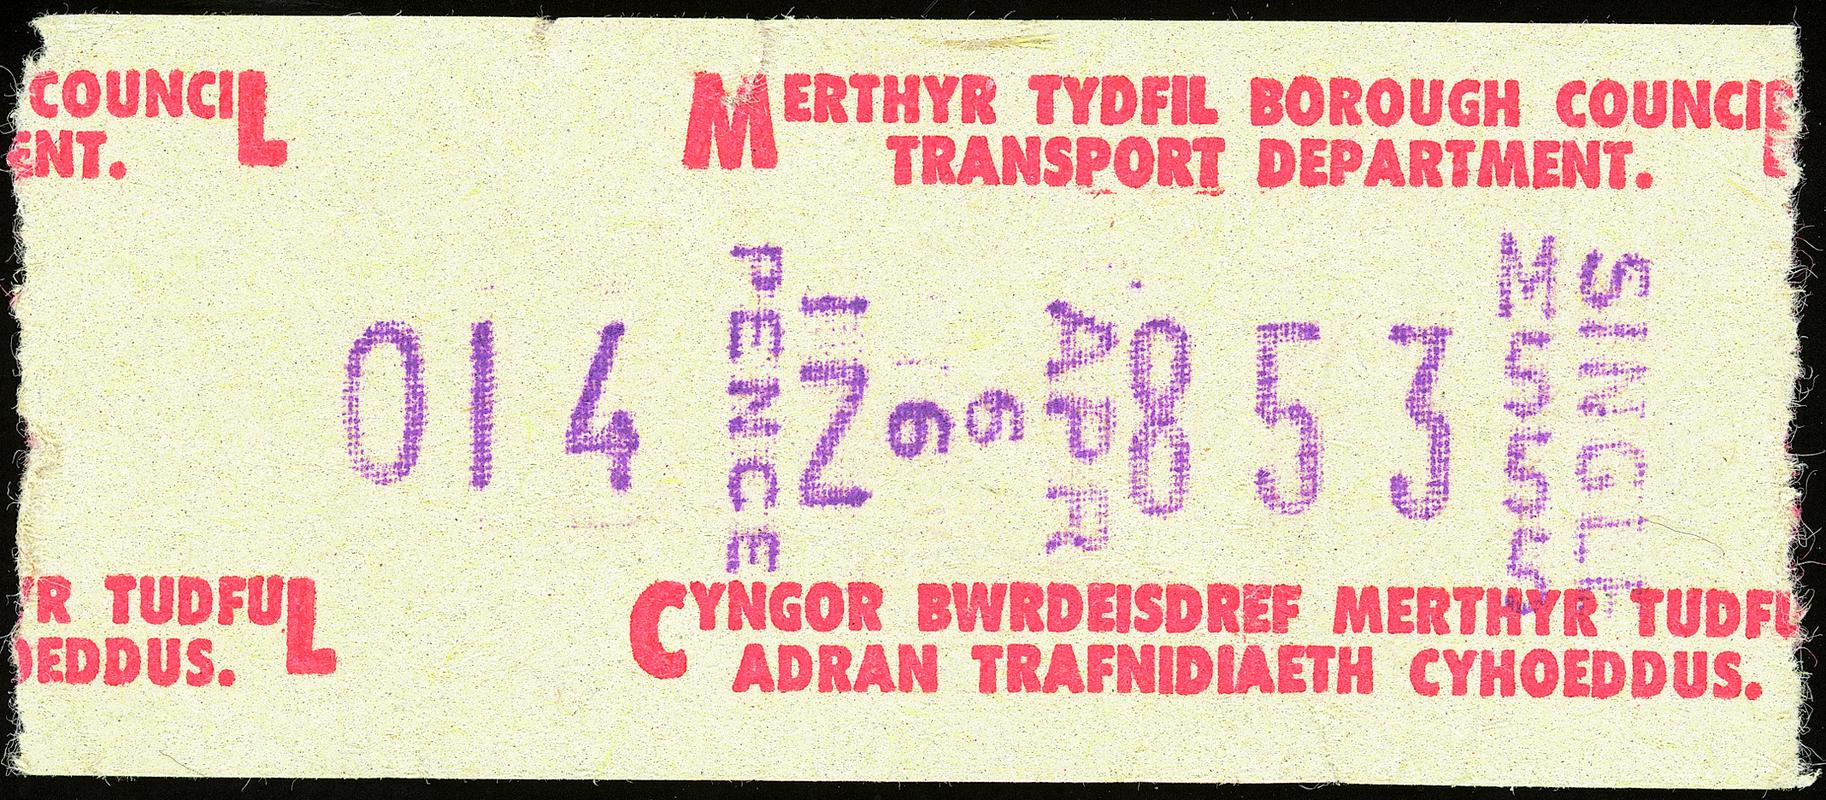 Merthyr Tydfil B. C. Trans Dept. bus ticket